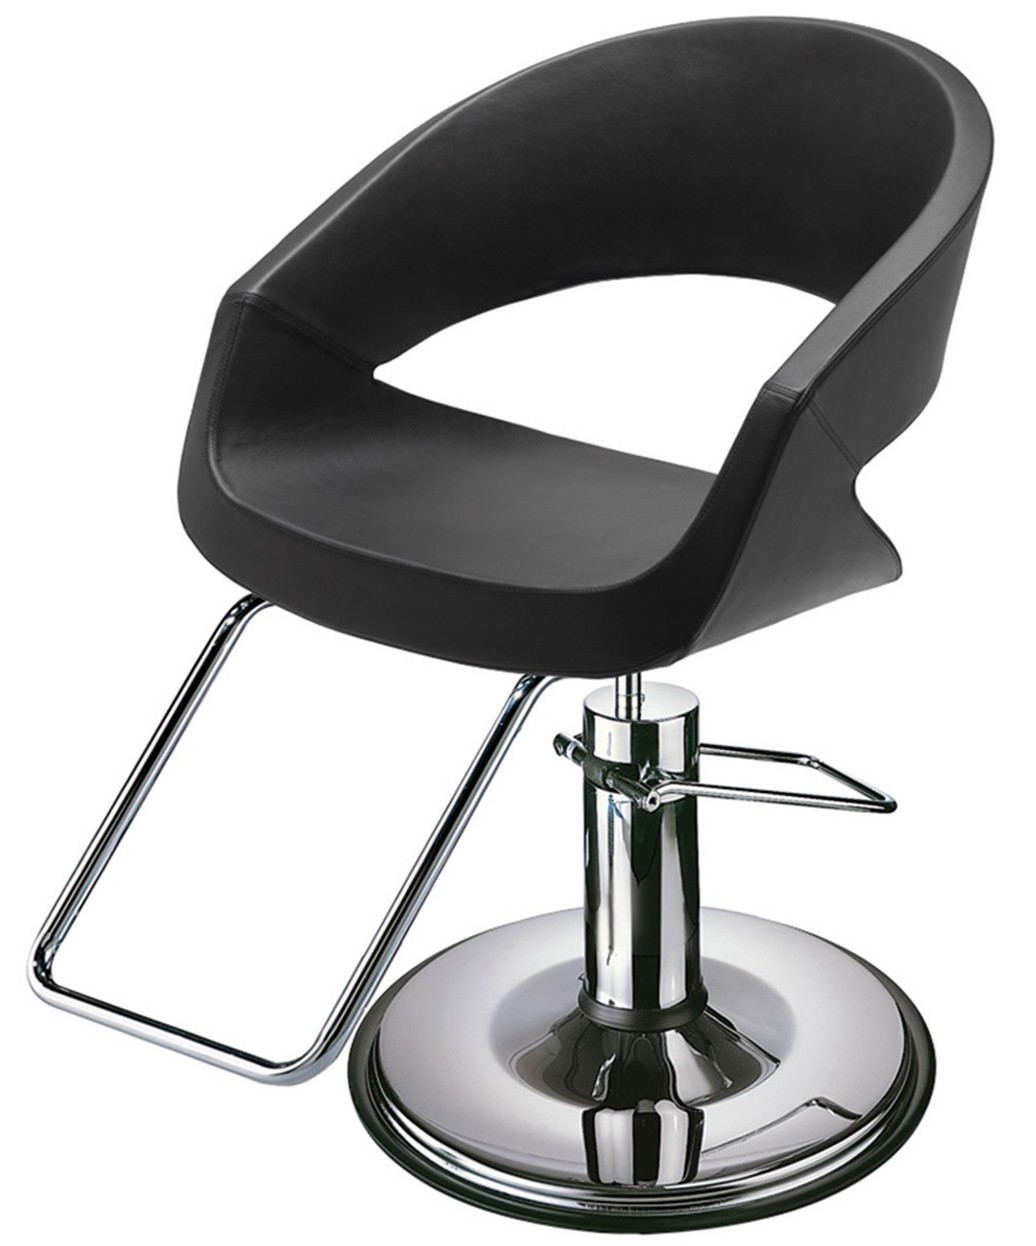 Takara Belmont St M80 Caruso Styling Chair